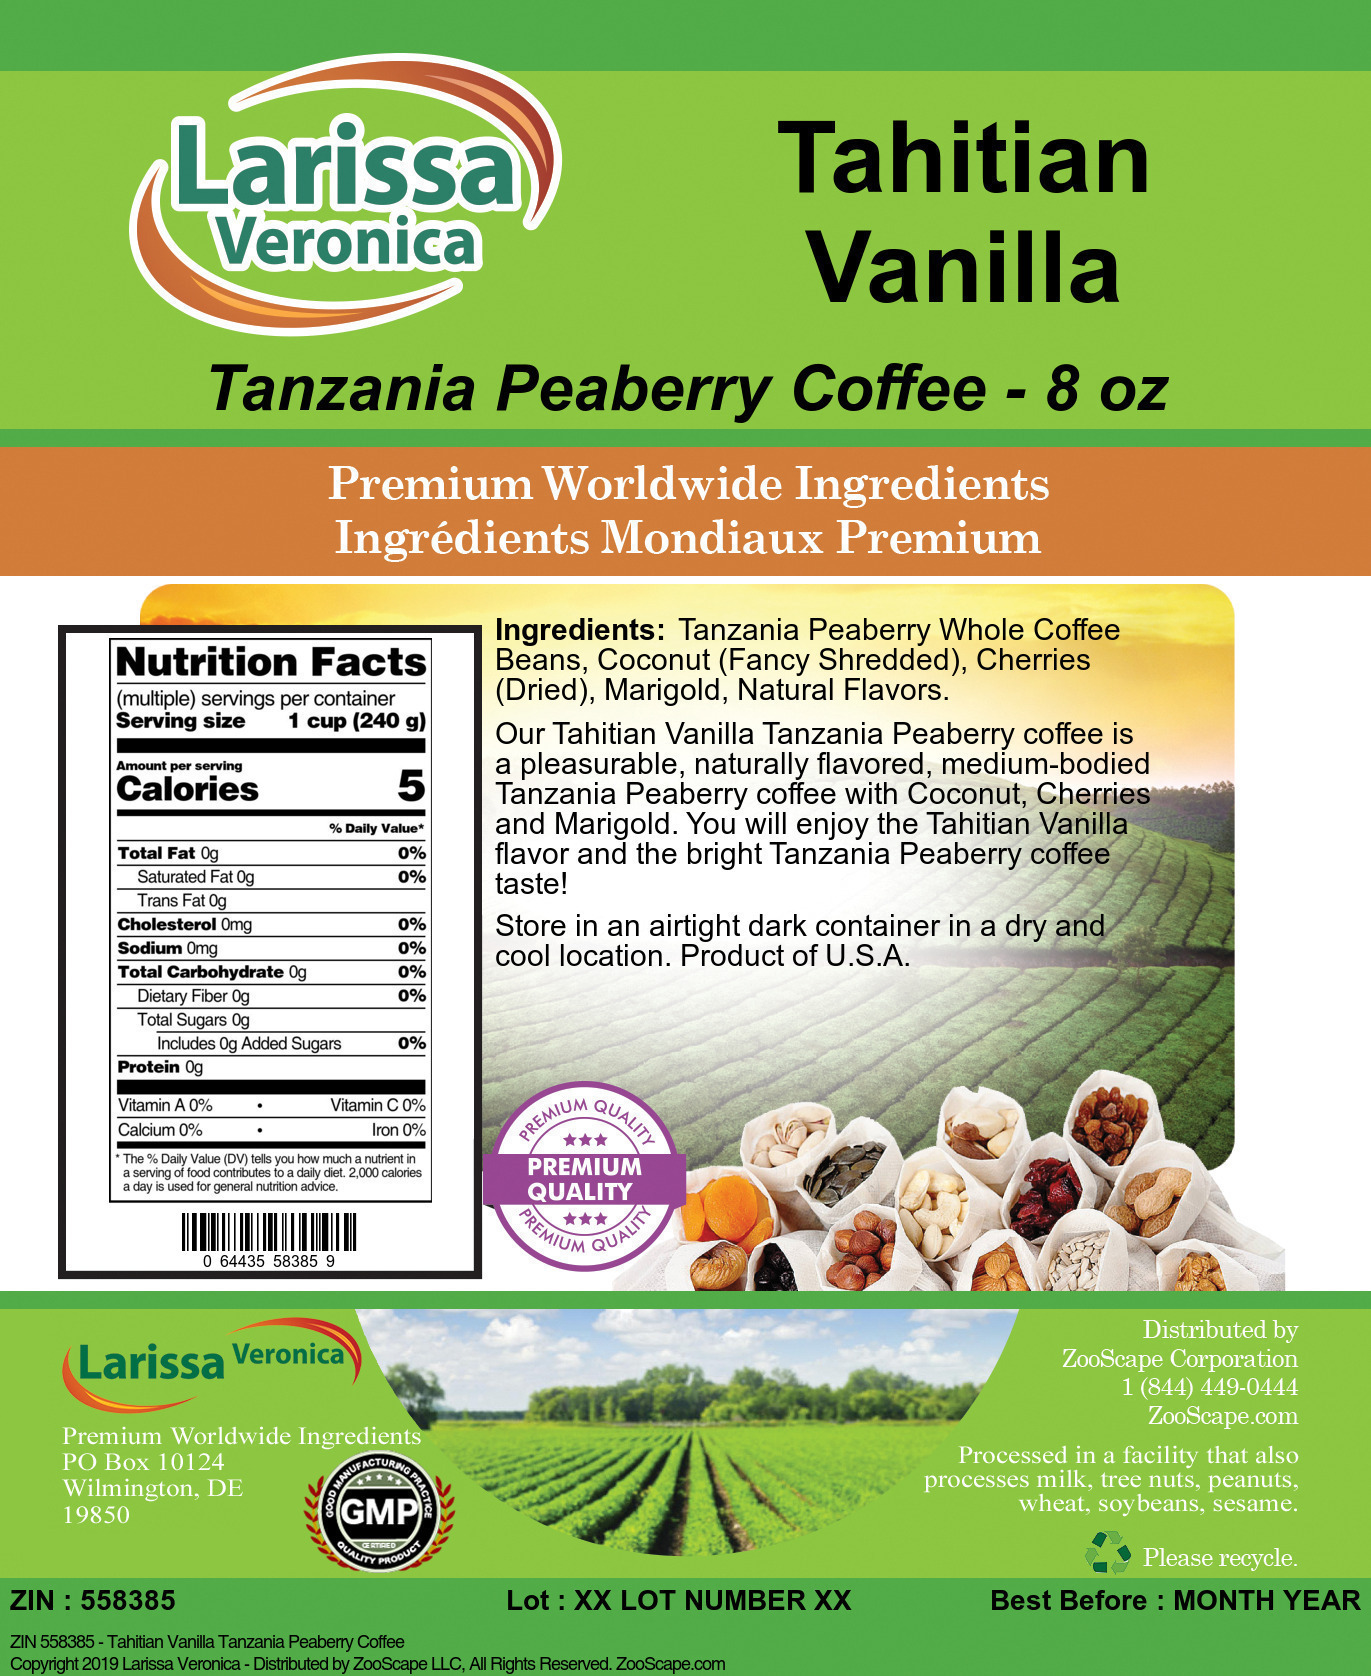 Tahitian Vanilla Tanzania Peaberry Coffee - Label